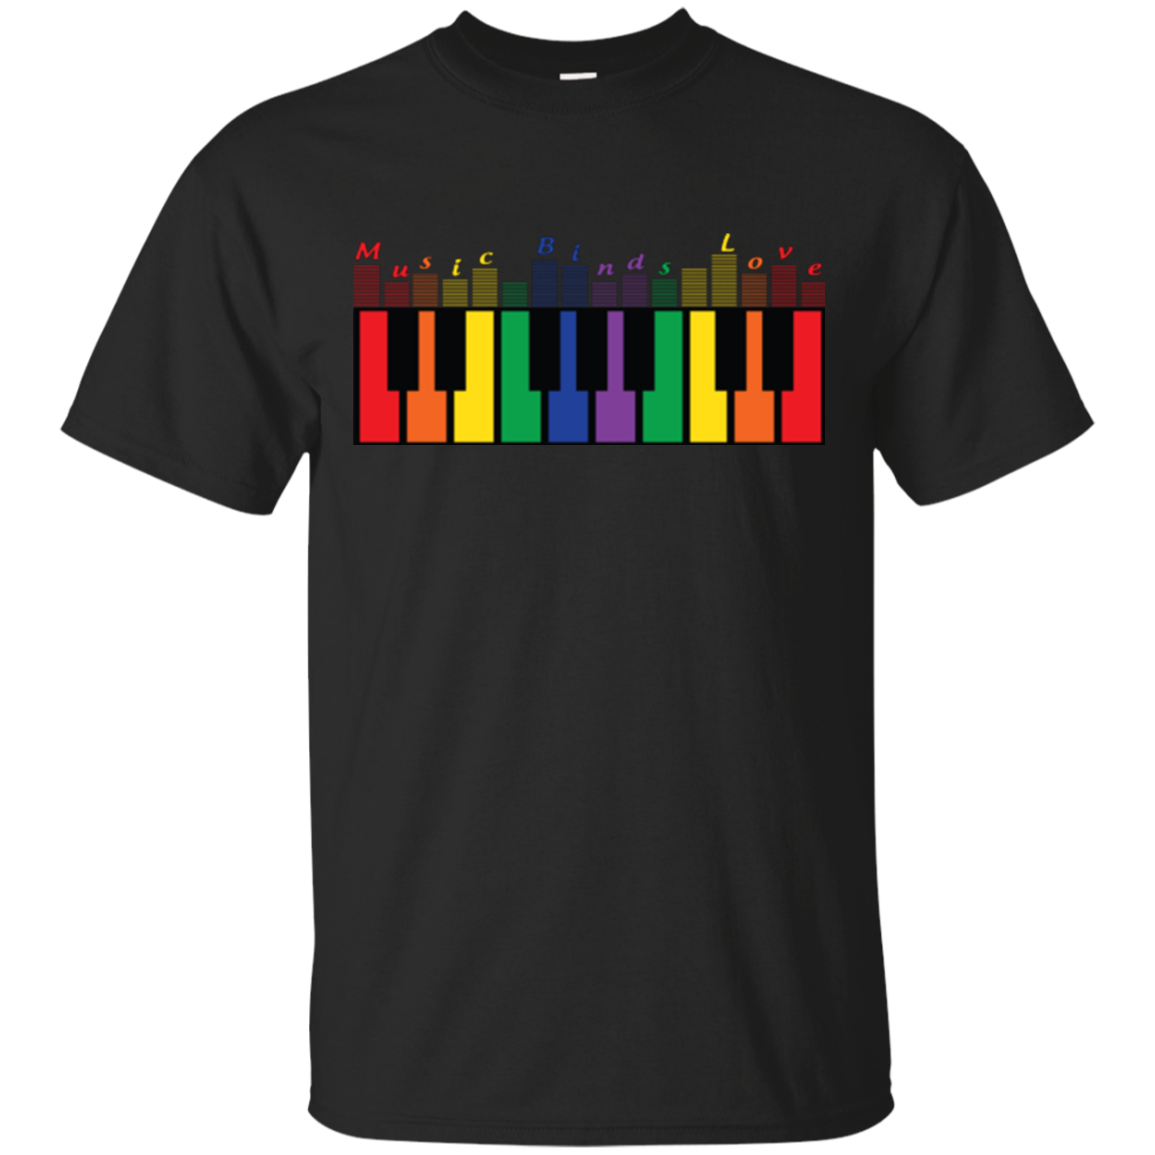 "Music Binds Love" Rainbow LGBT Pride black round neck tshirt for men